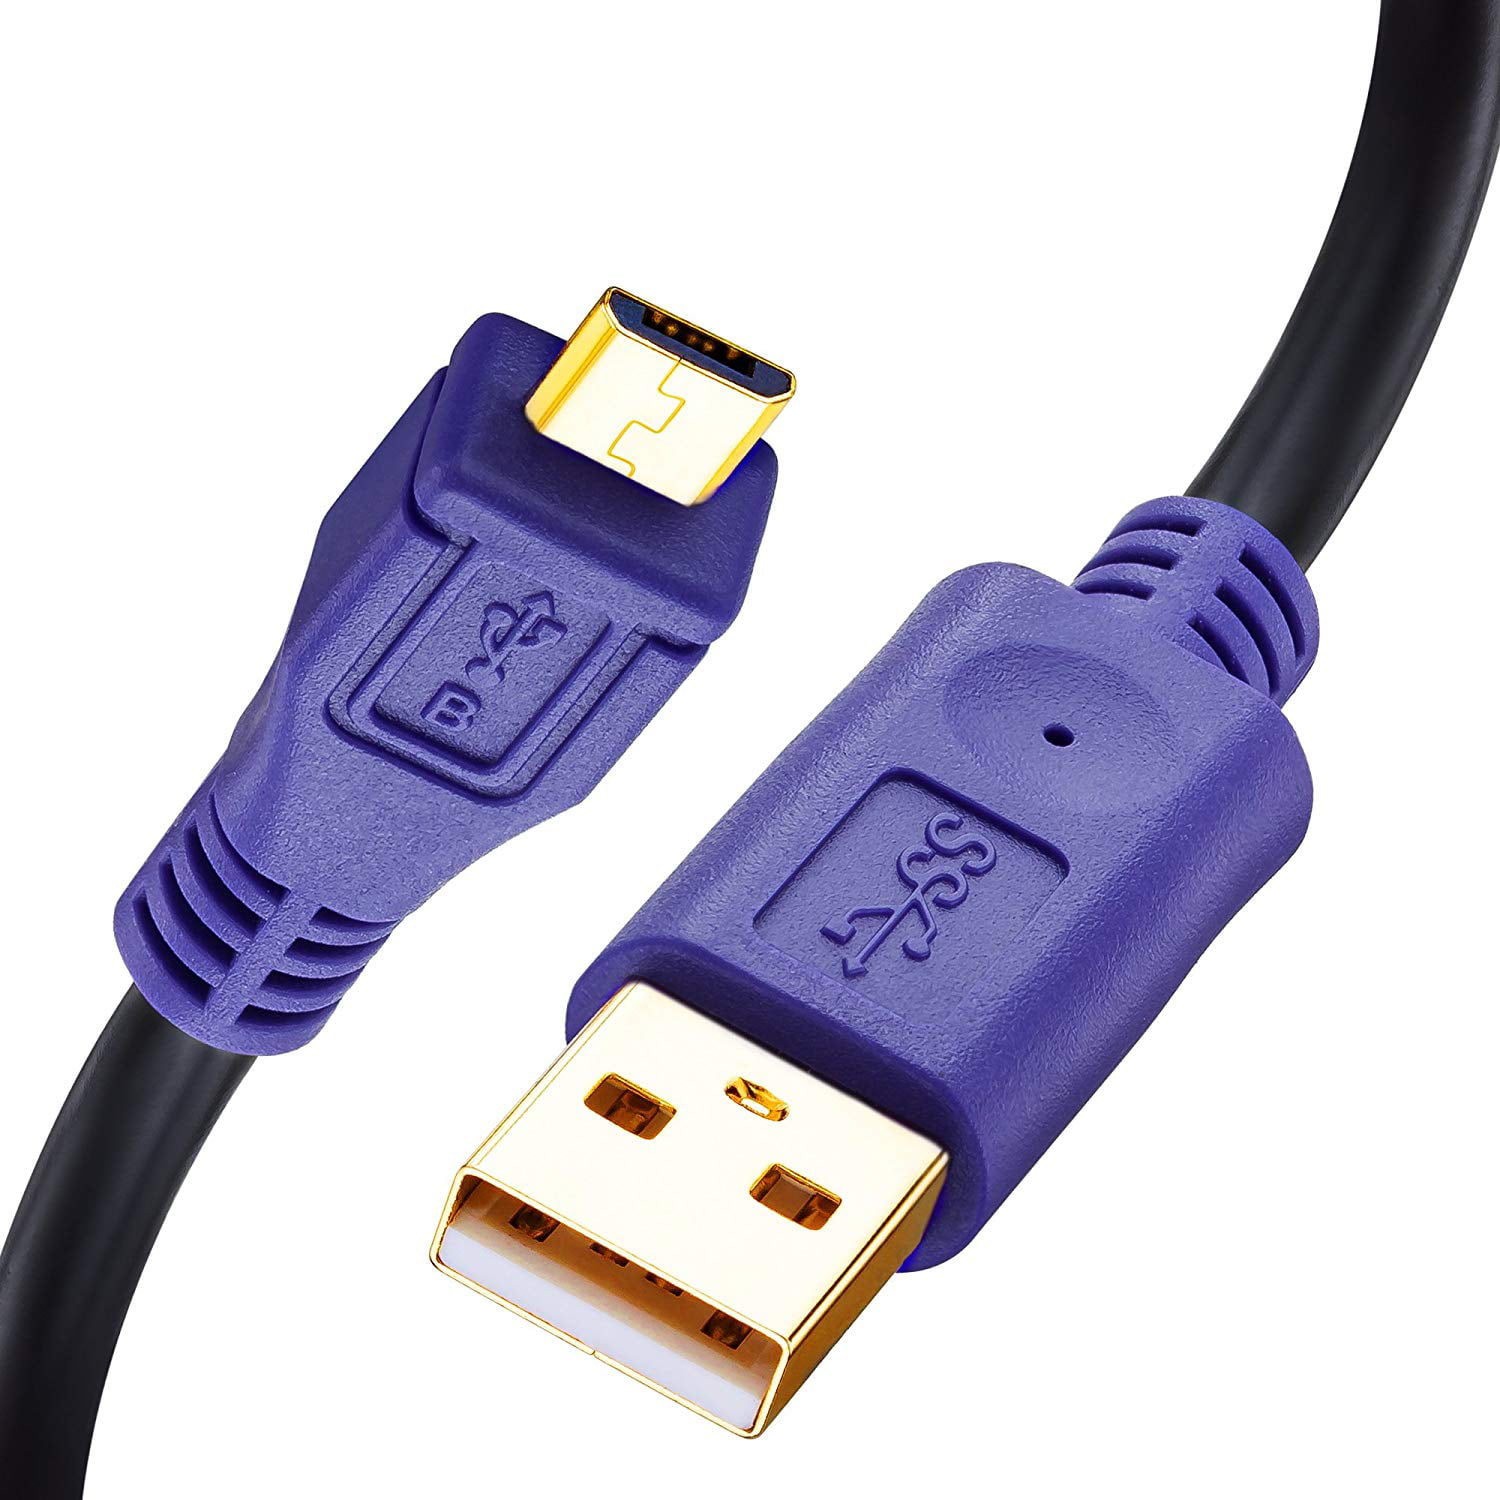 ReadyPlug Universal USB 2.0 A to B Micro Cable Computer Charger Data 25 feet, Black 